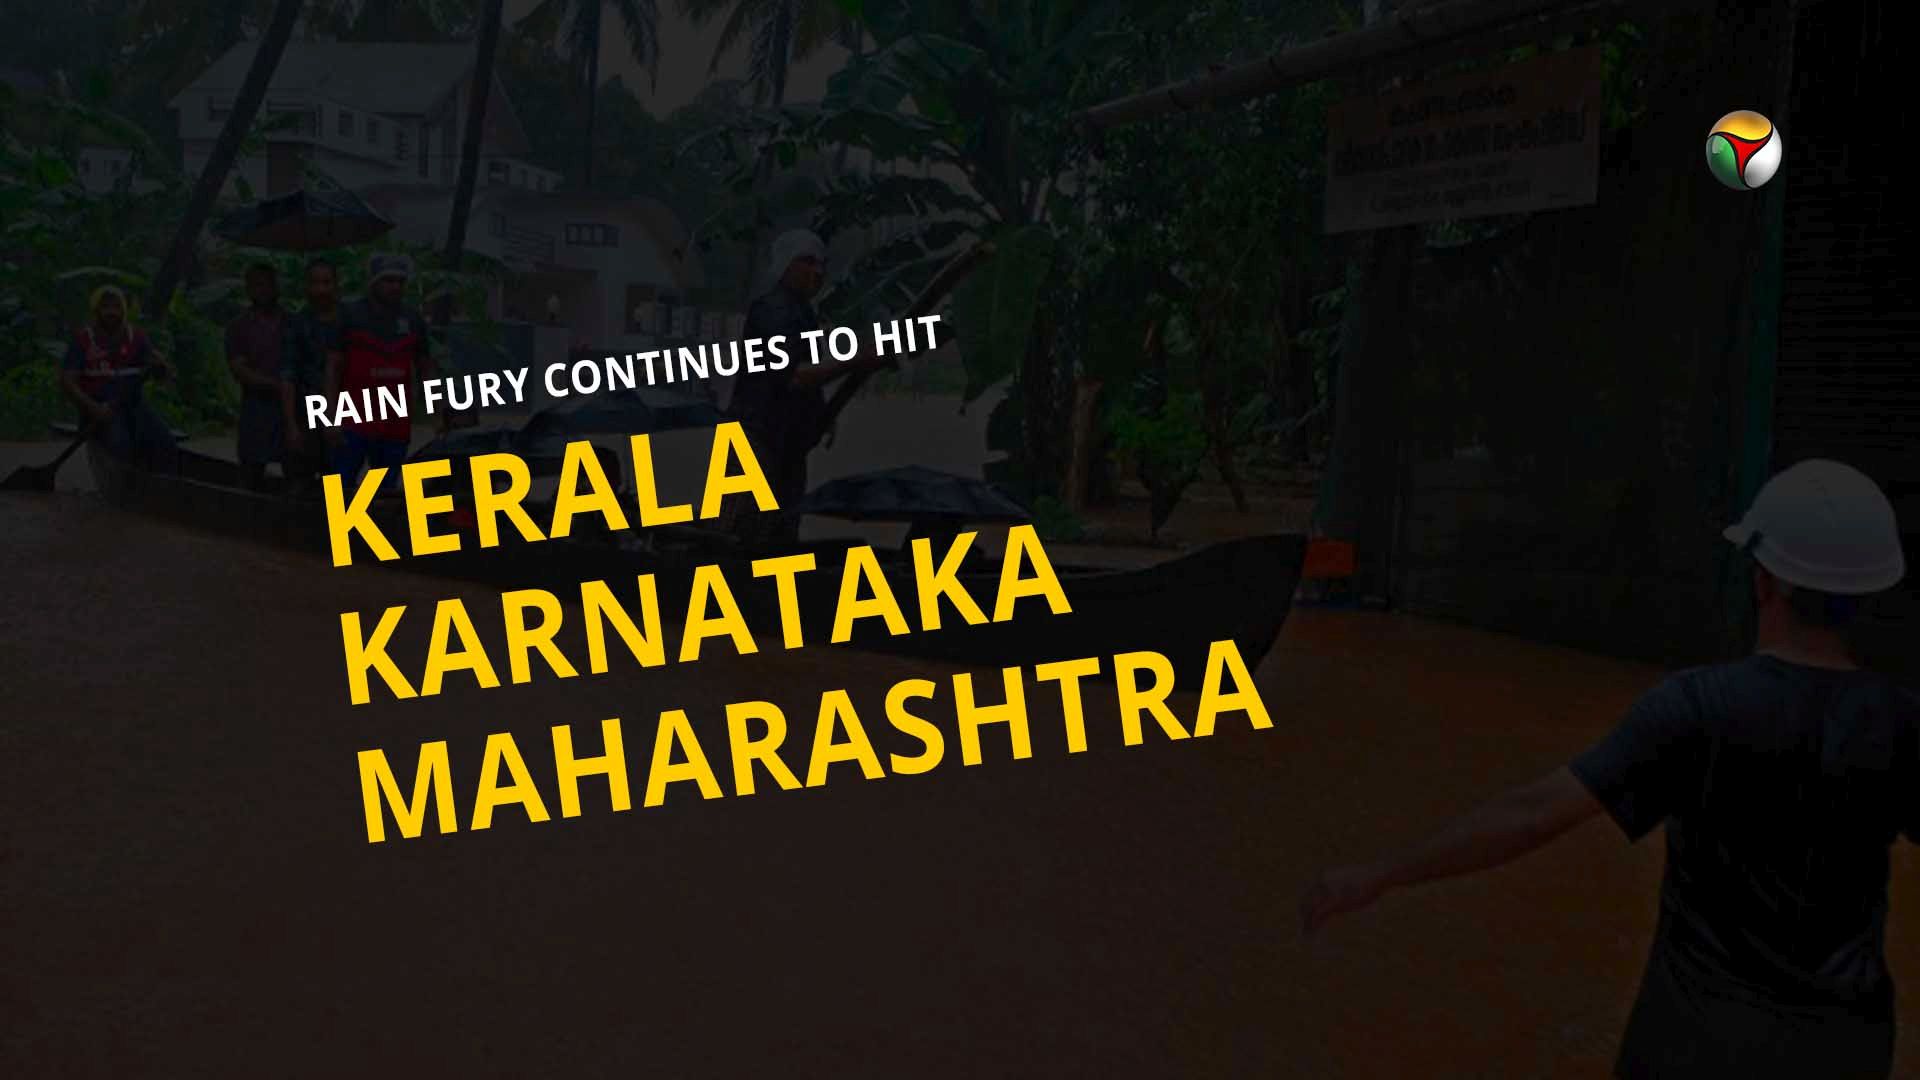 Rain fury continues to hit Kerala, Karnataka and Maharashtra